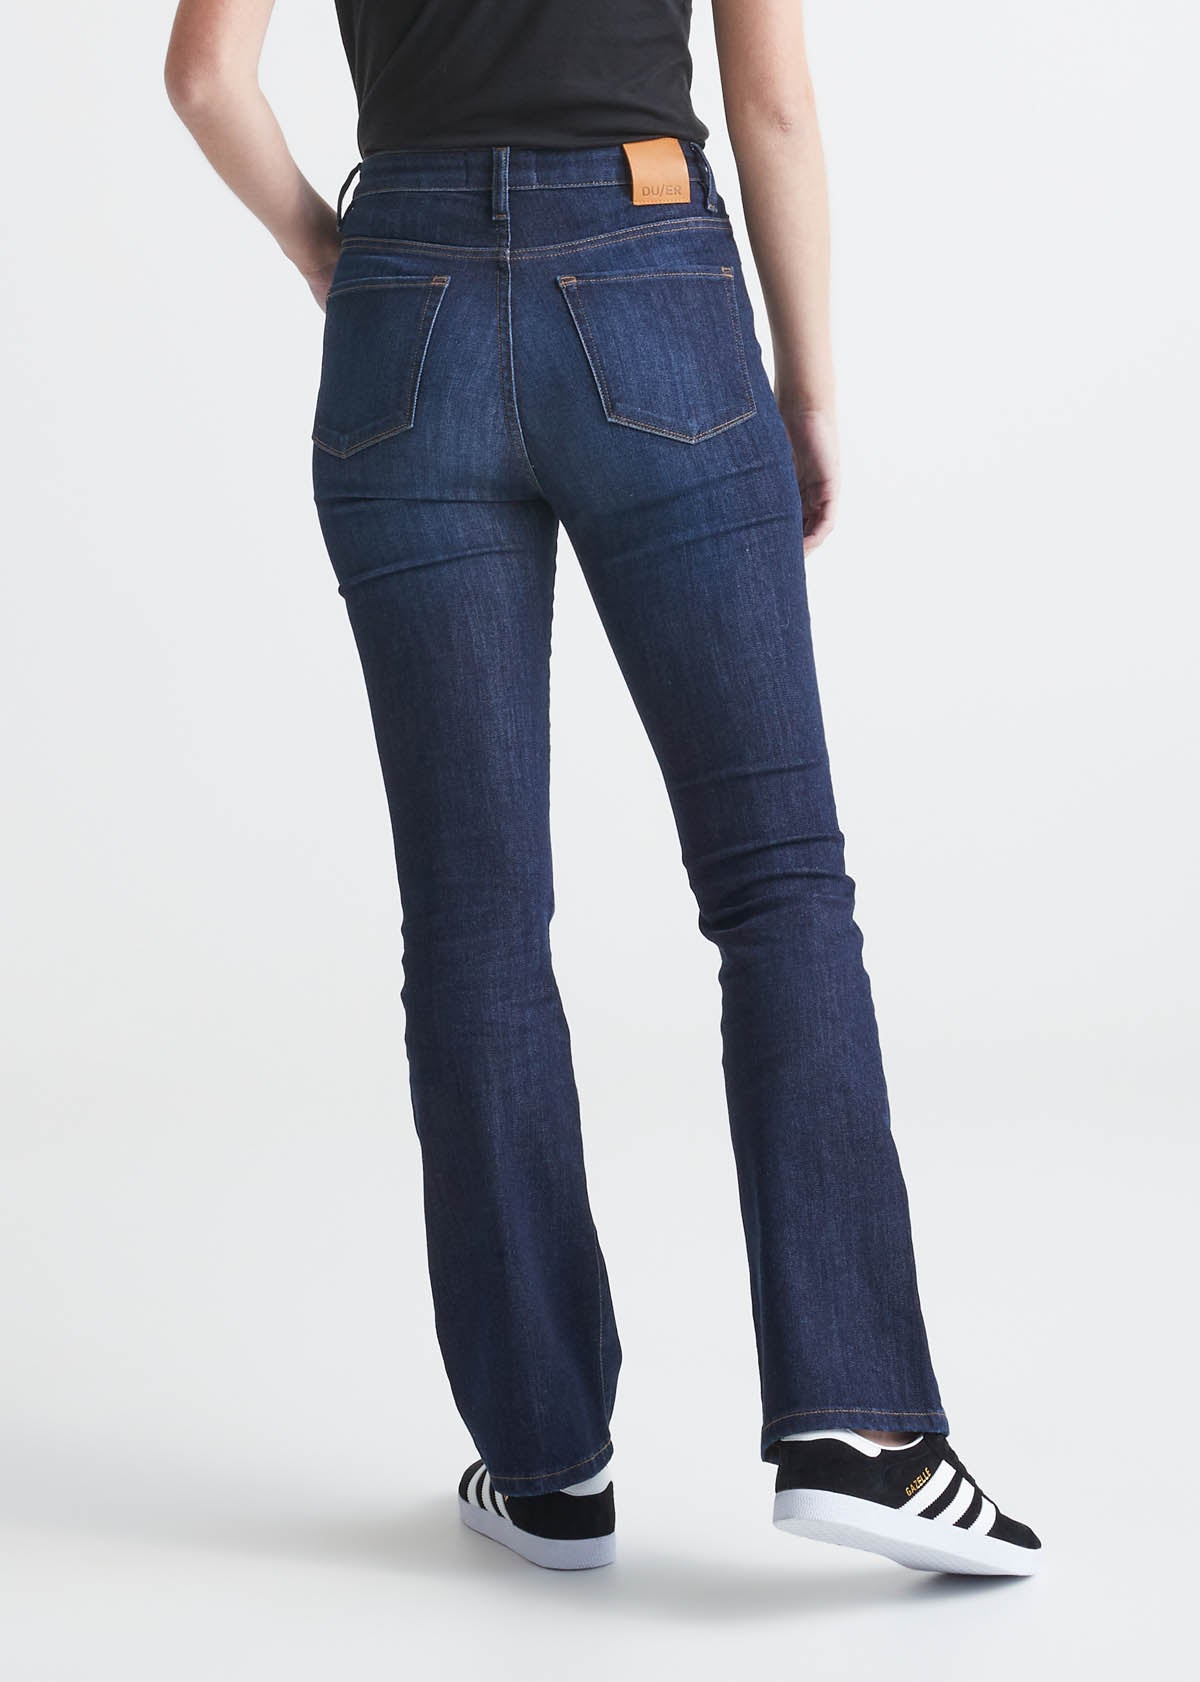 Suko Jeans Womens Power Stretch Boot Cut Jeans 17324 Blue Black 6